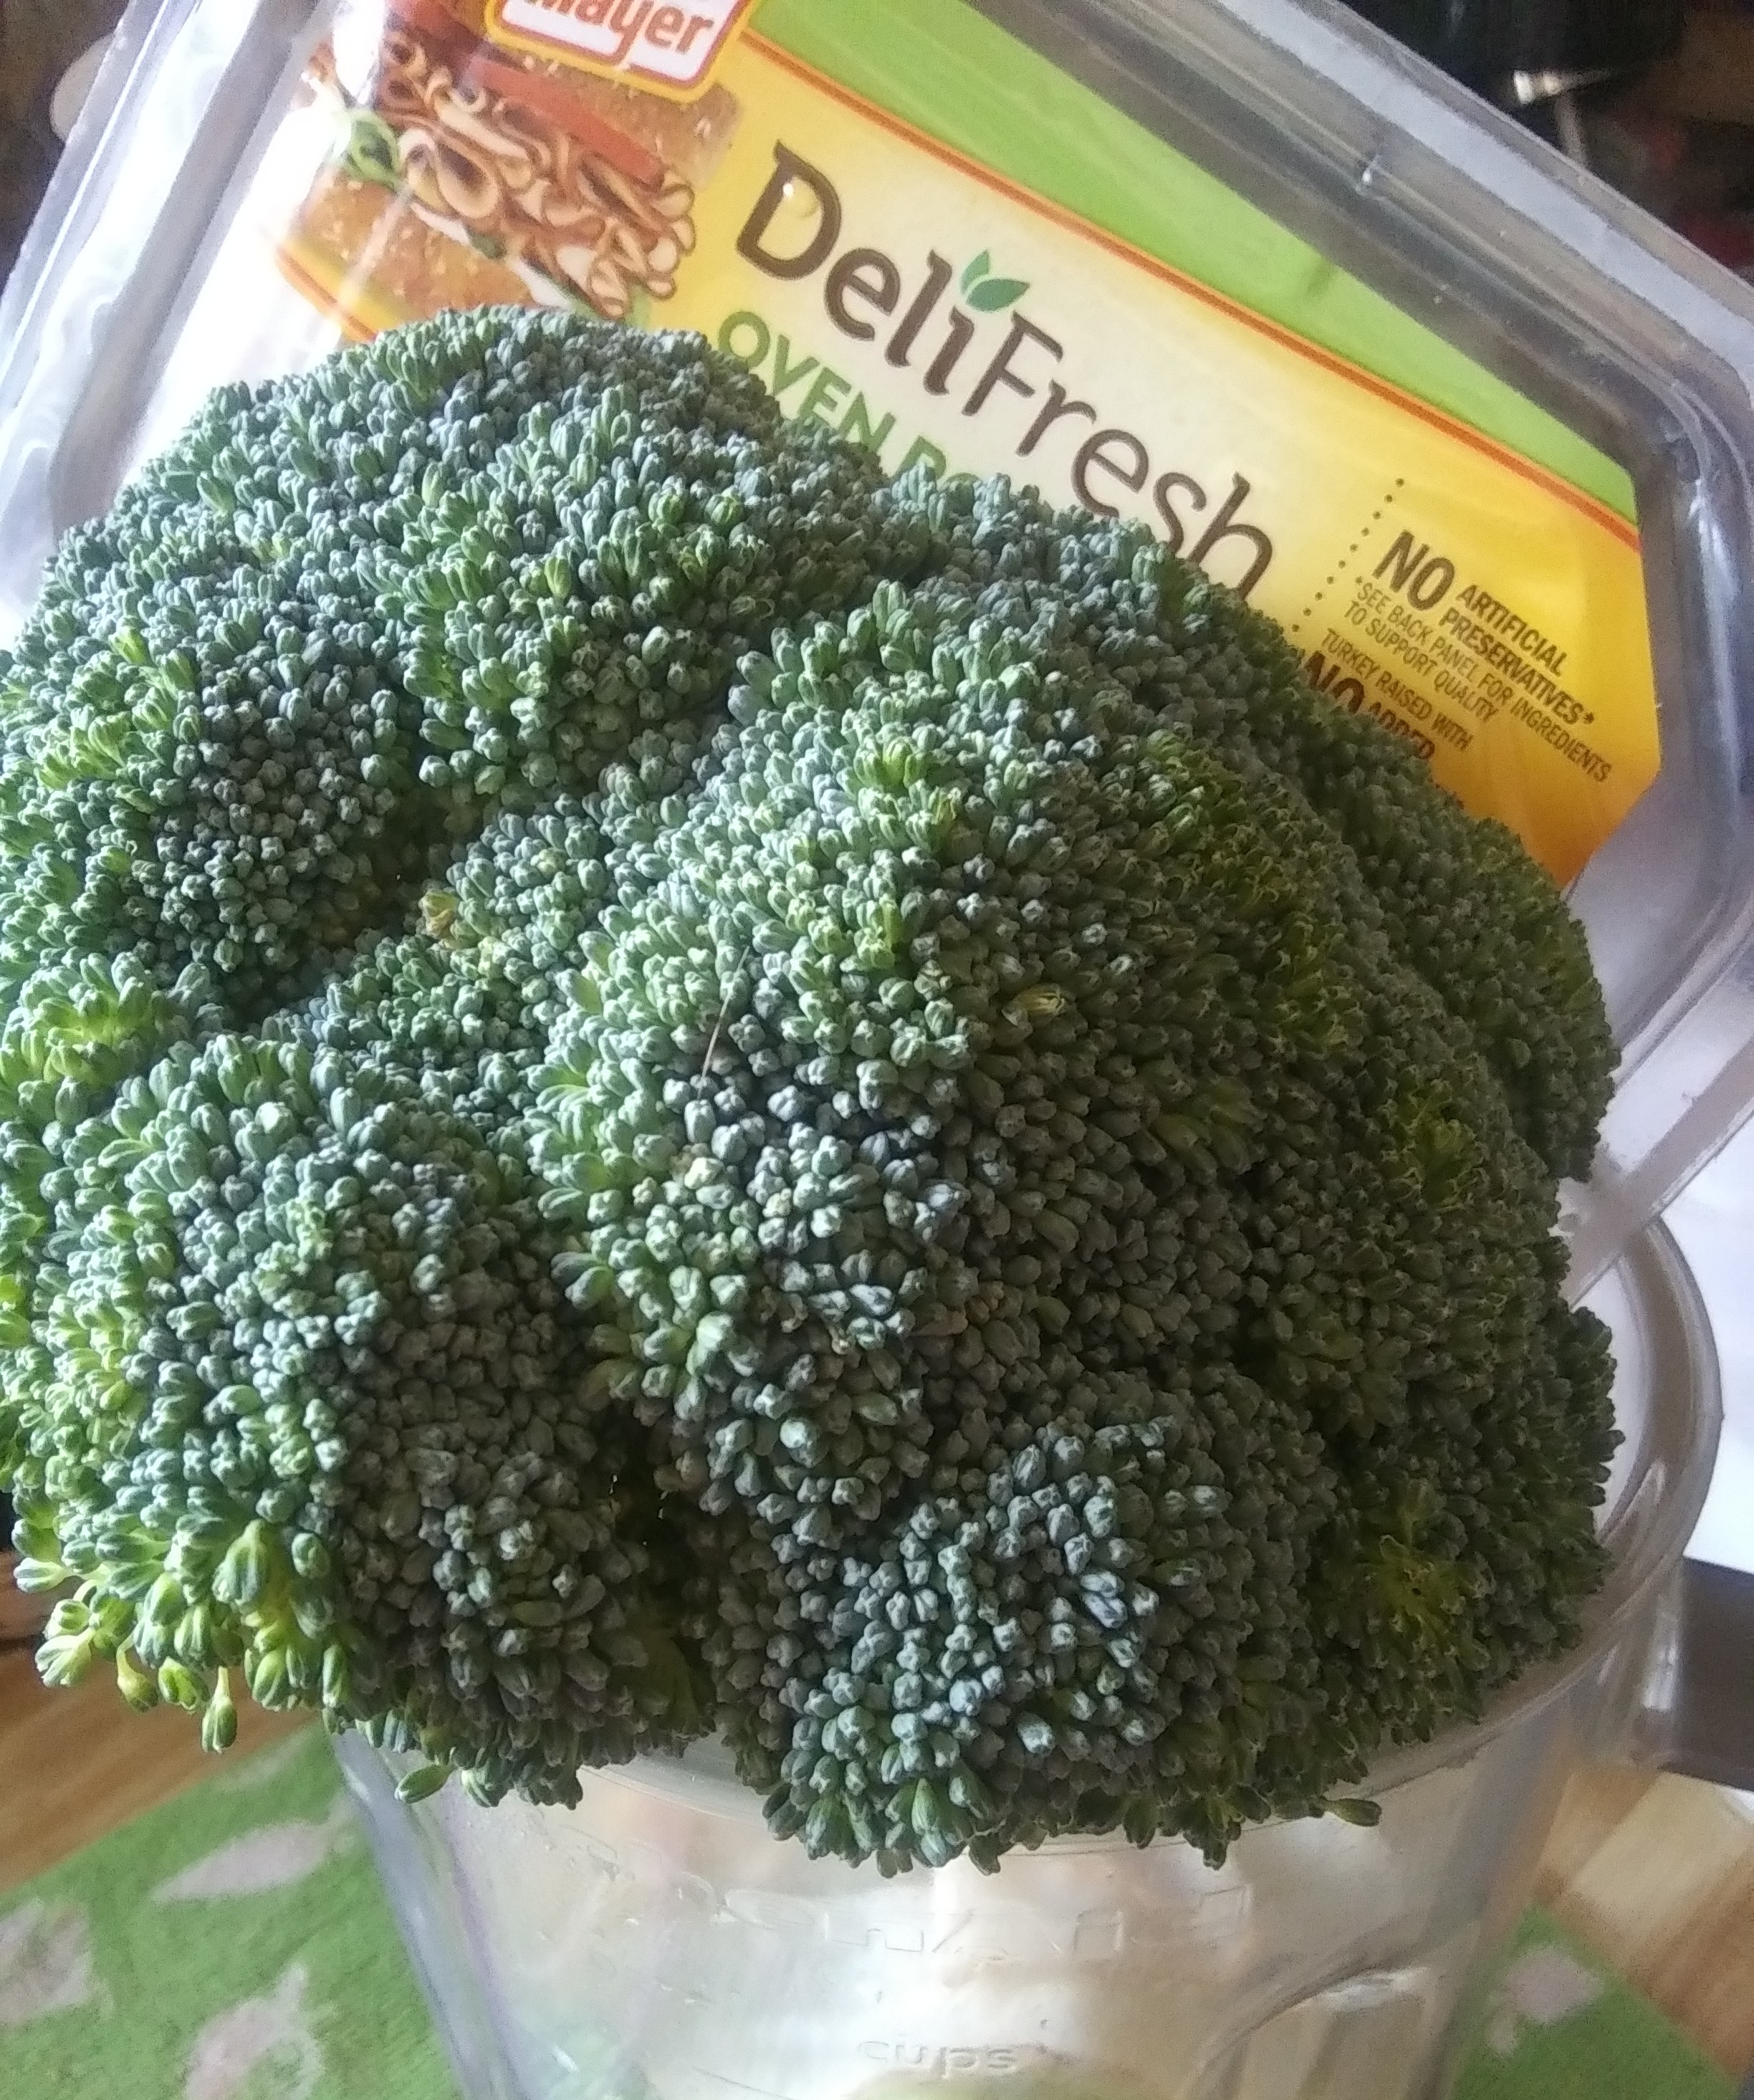 Raw broccoli recipe for dogs